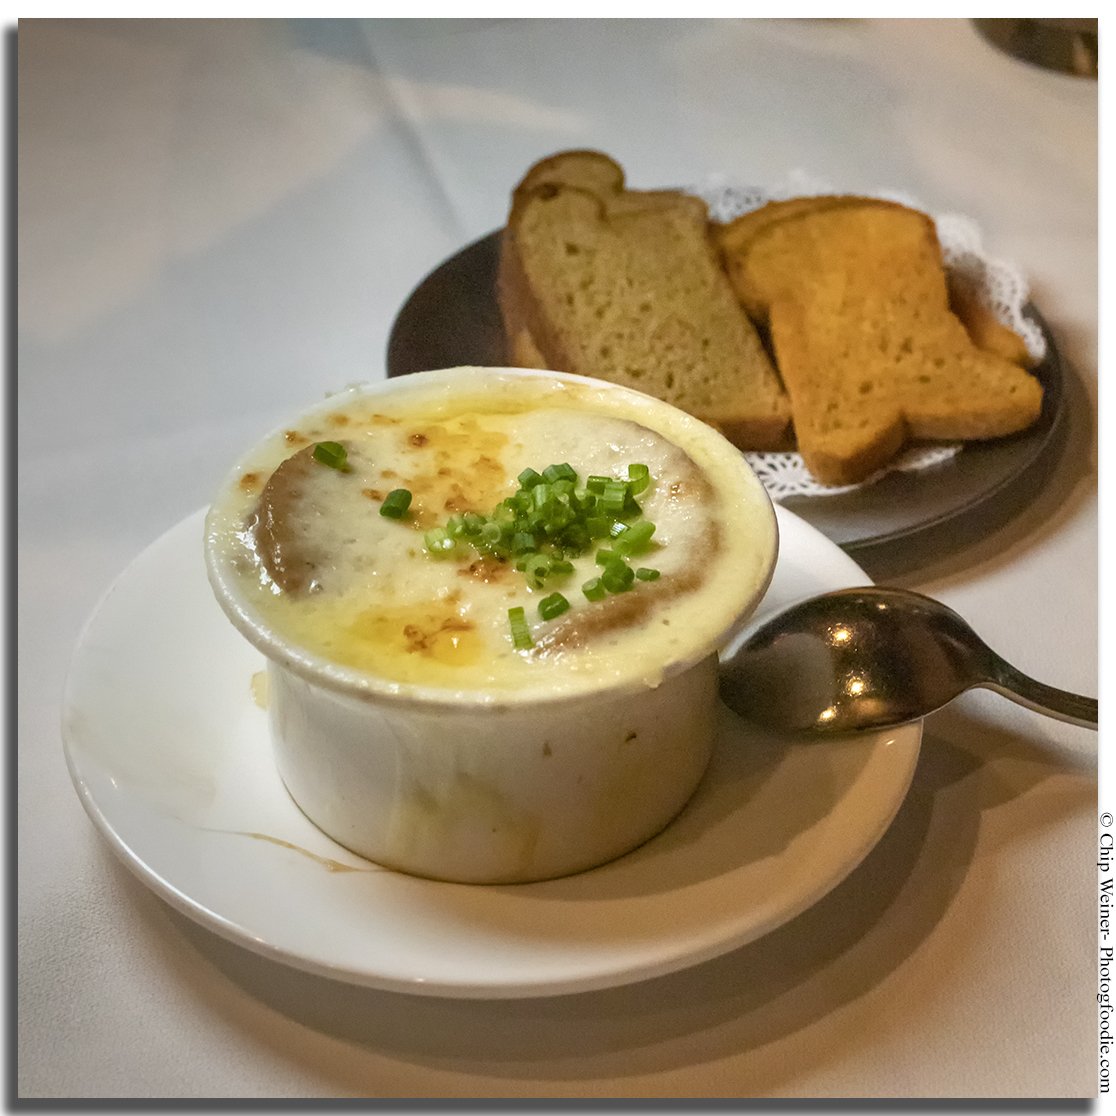 Bern's French onion soup